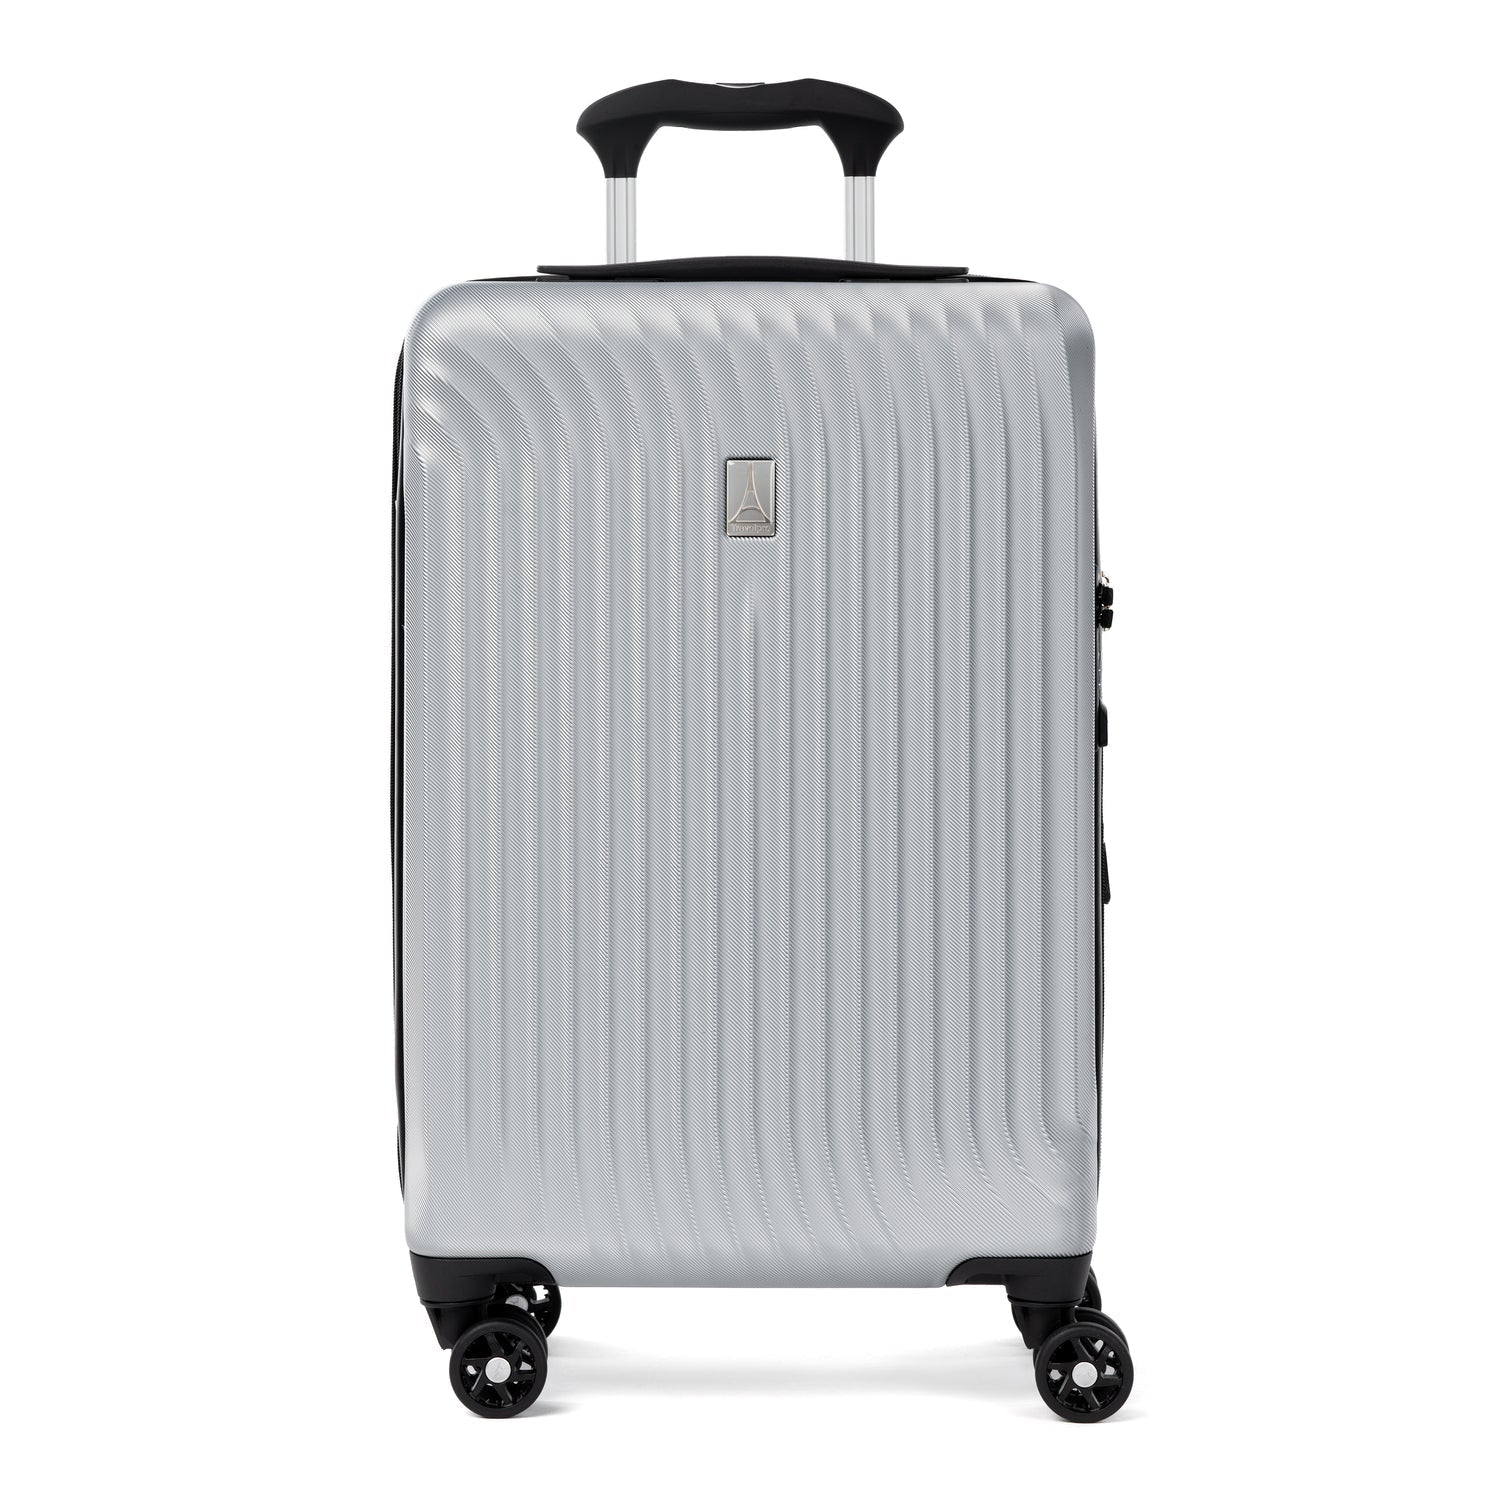 Verborgen Verplicht Verwoesting Maxlite® Air Compact Handbagage uitbreidbaar Hardside 4 spinnerwielen 55cm (55  x 3 - Travelpro® Europe